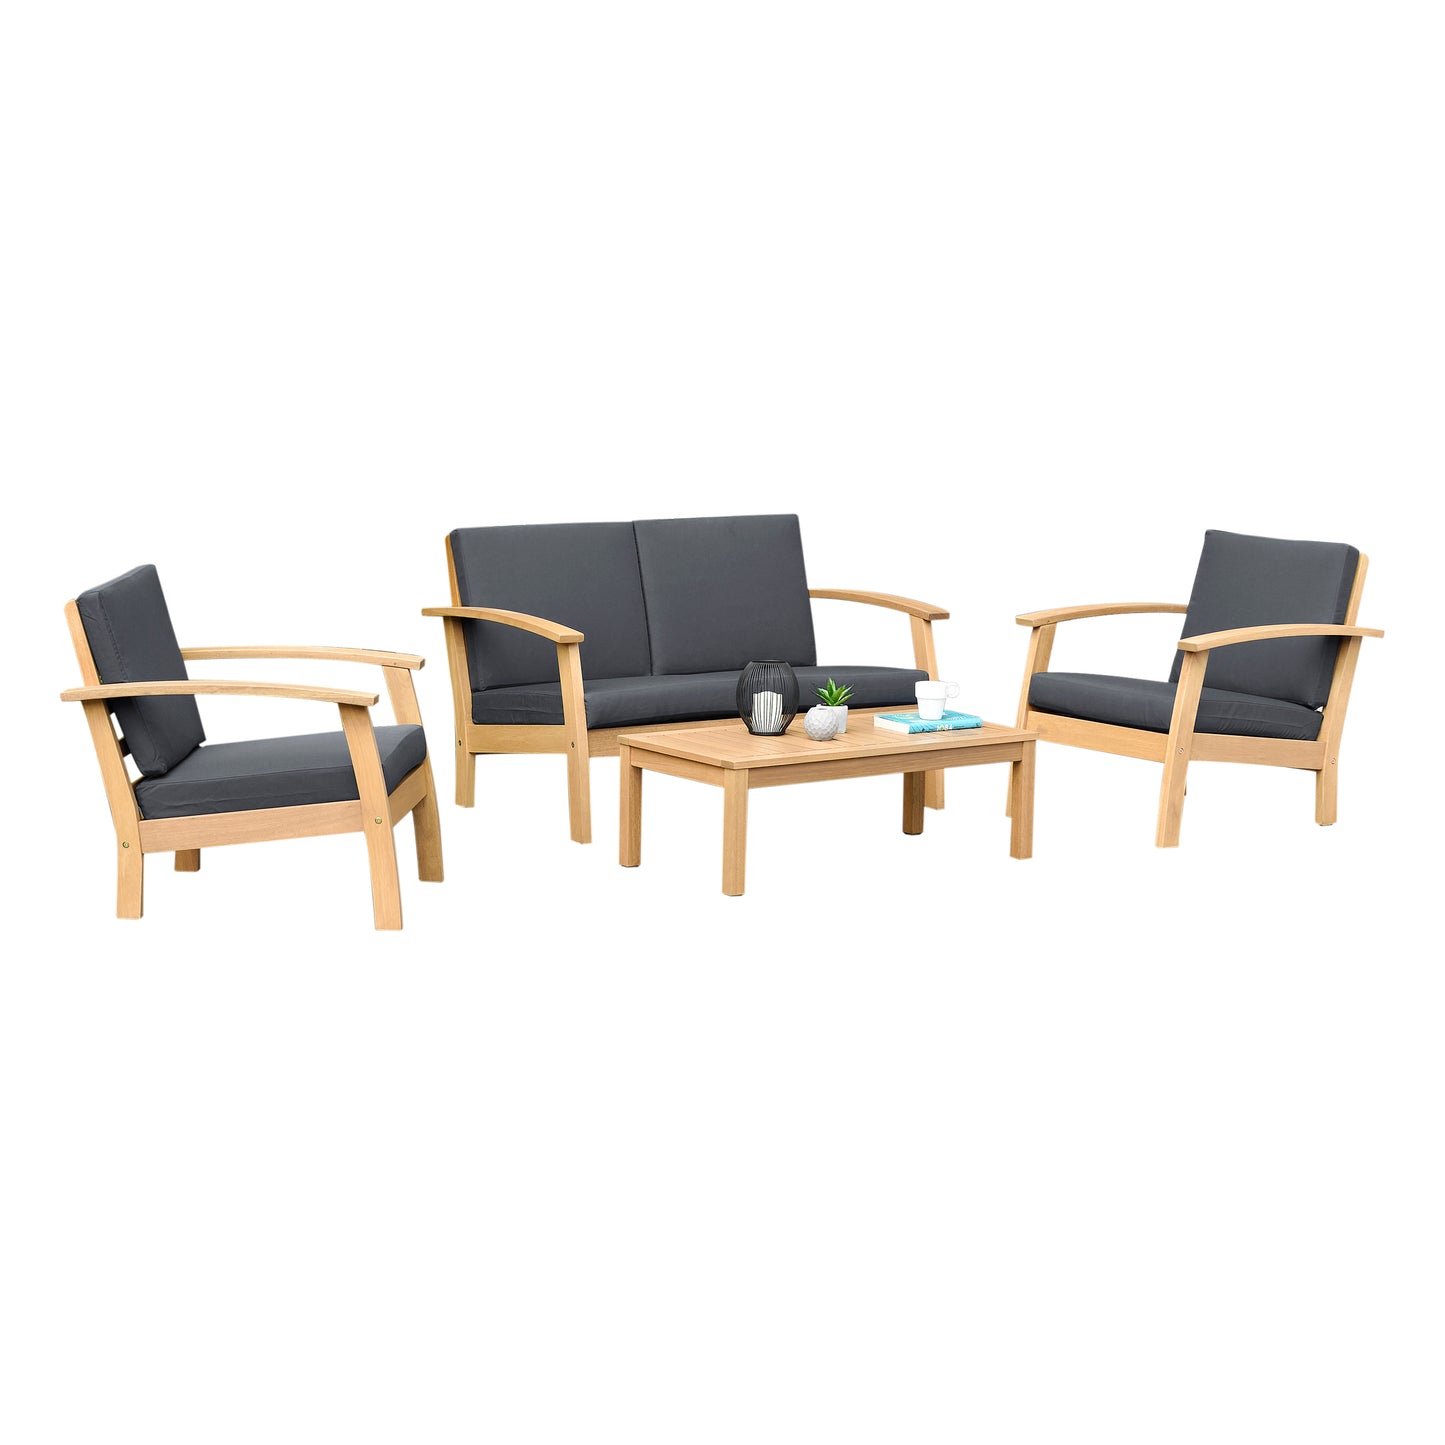 Kingsbury Teak Finish 100% FSC Certified Solid Wood With Black Cushion Seating Set